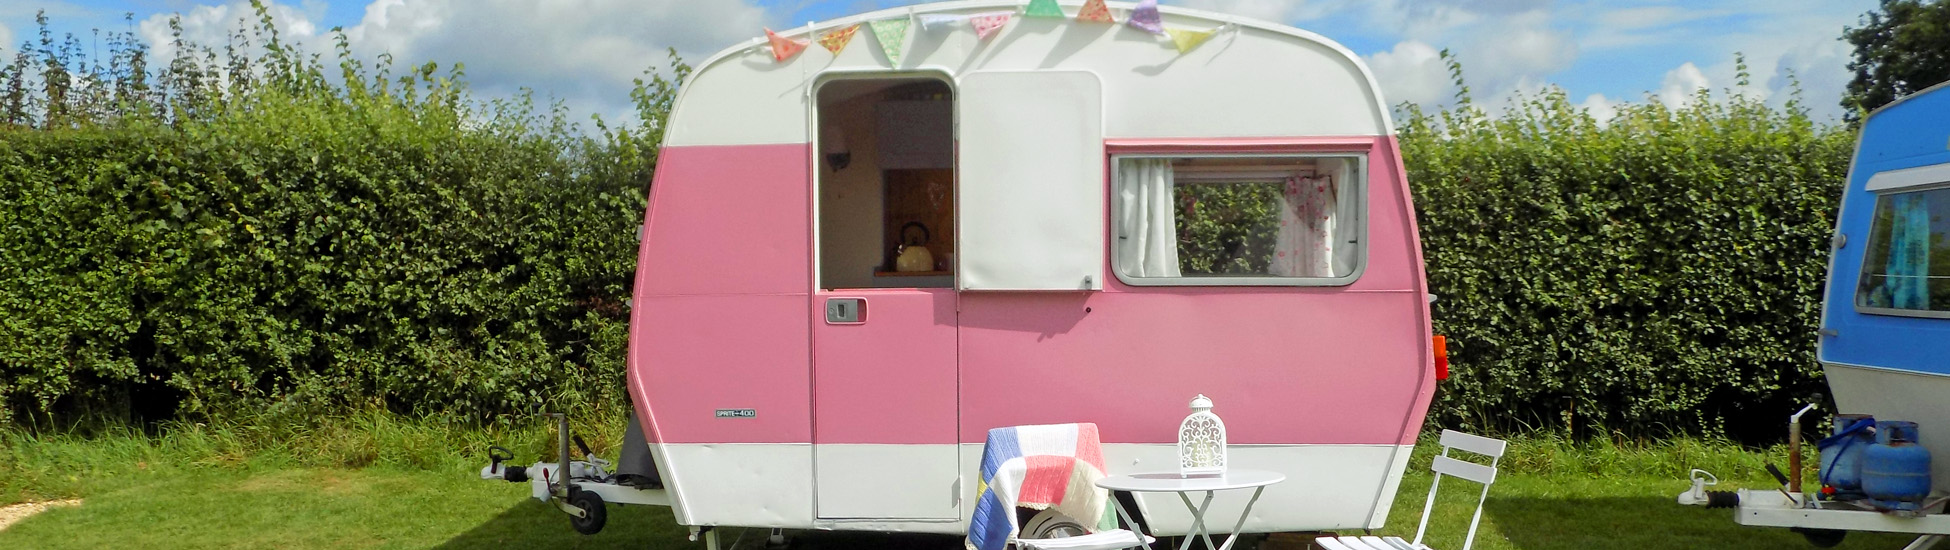 pink caravan